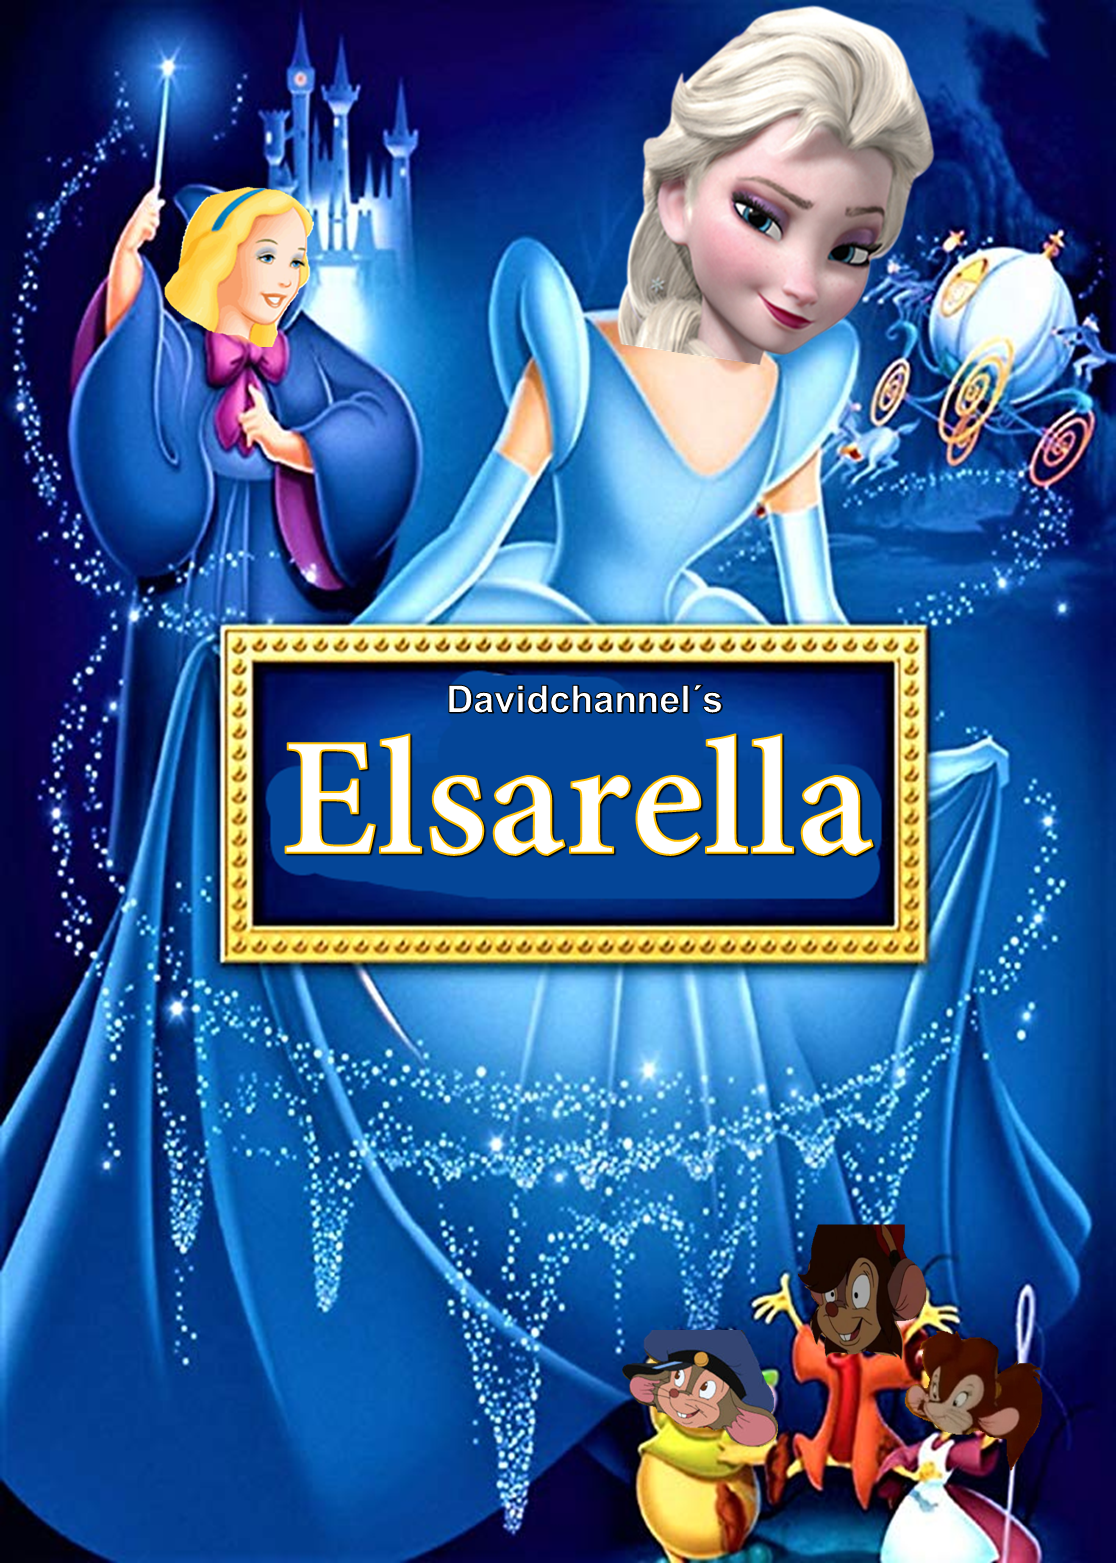 Cinderella (1950 film) - Wikipedia